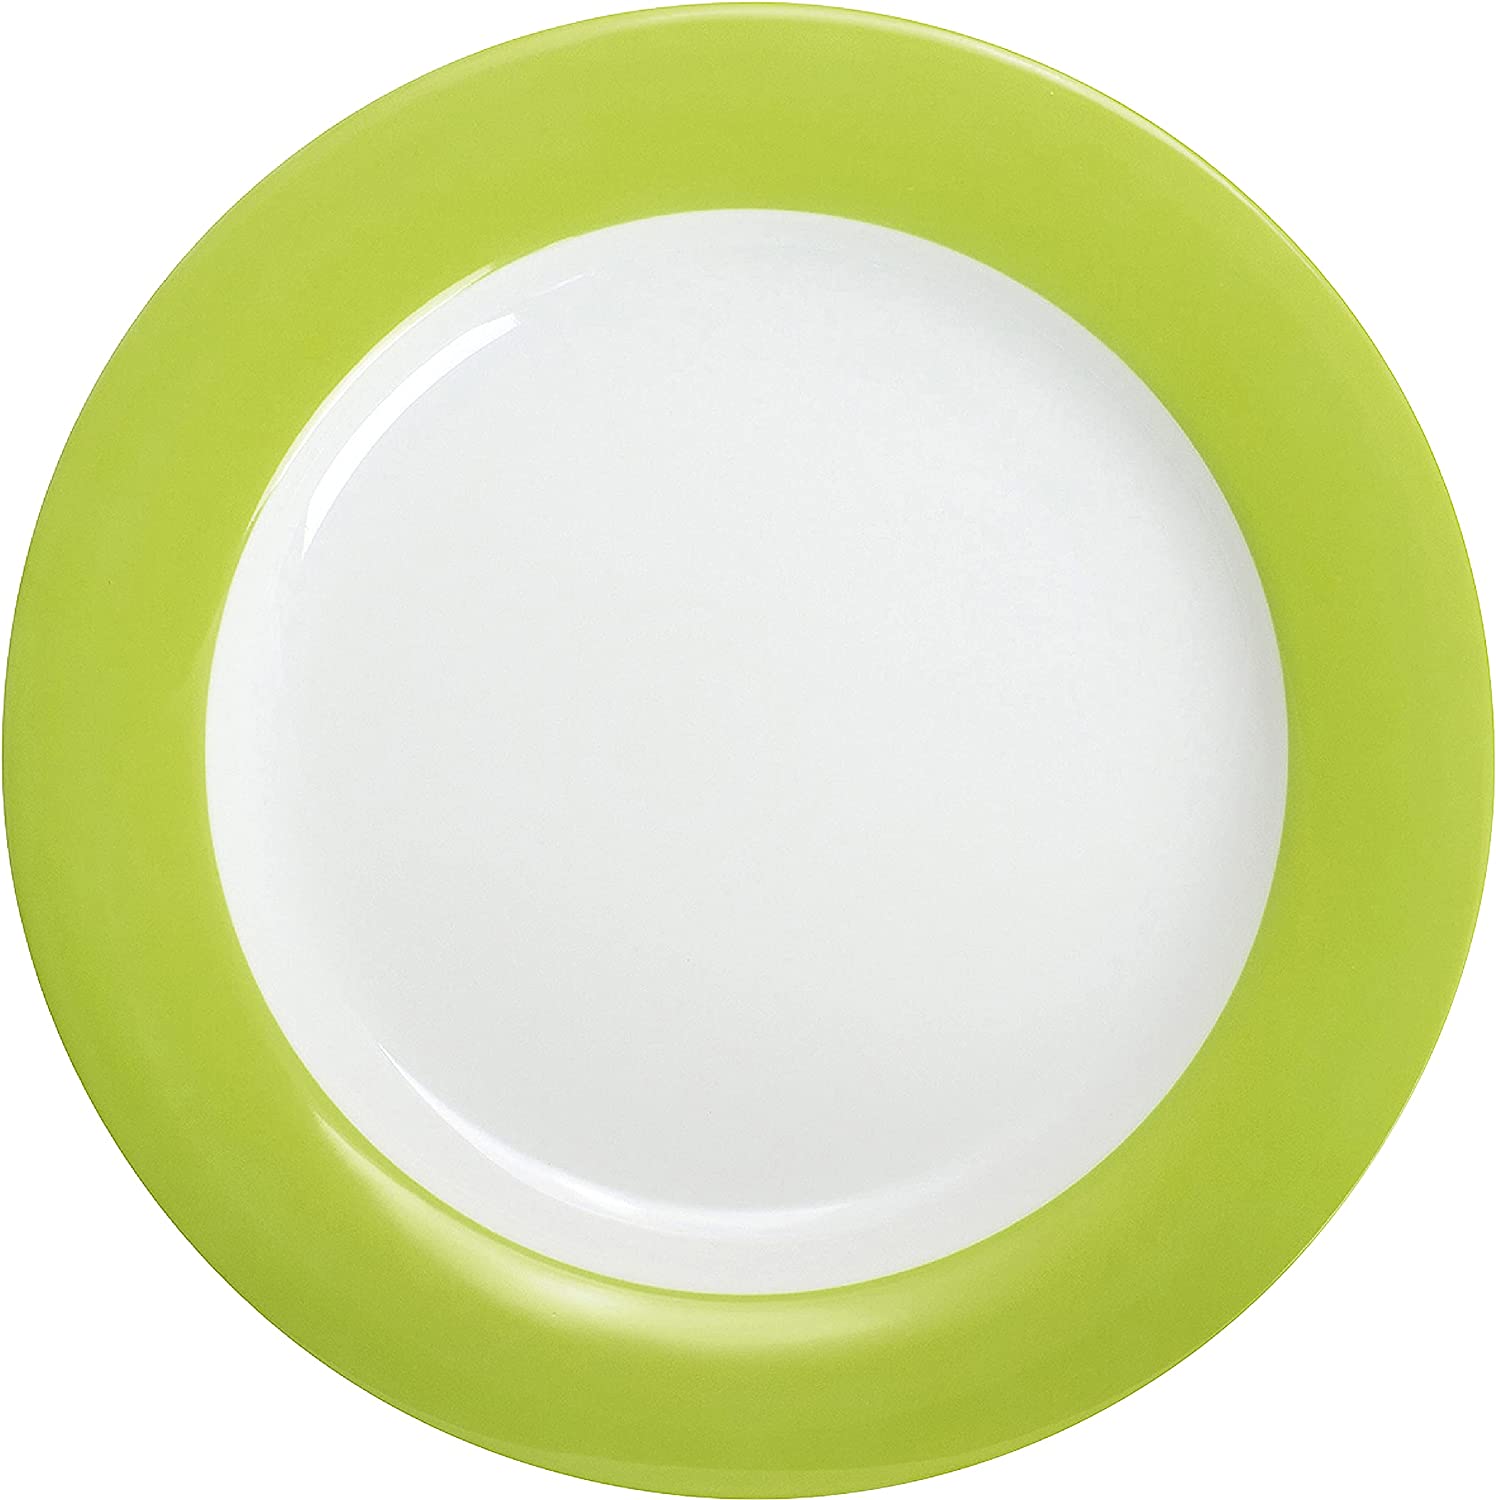 Kahla pronto colore dinner plater, plate, porcelain, lime, 26 centimeter, 573403A72456C